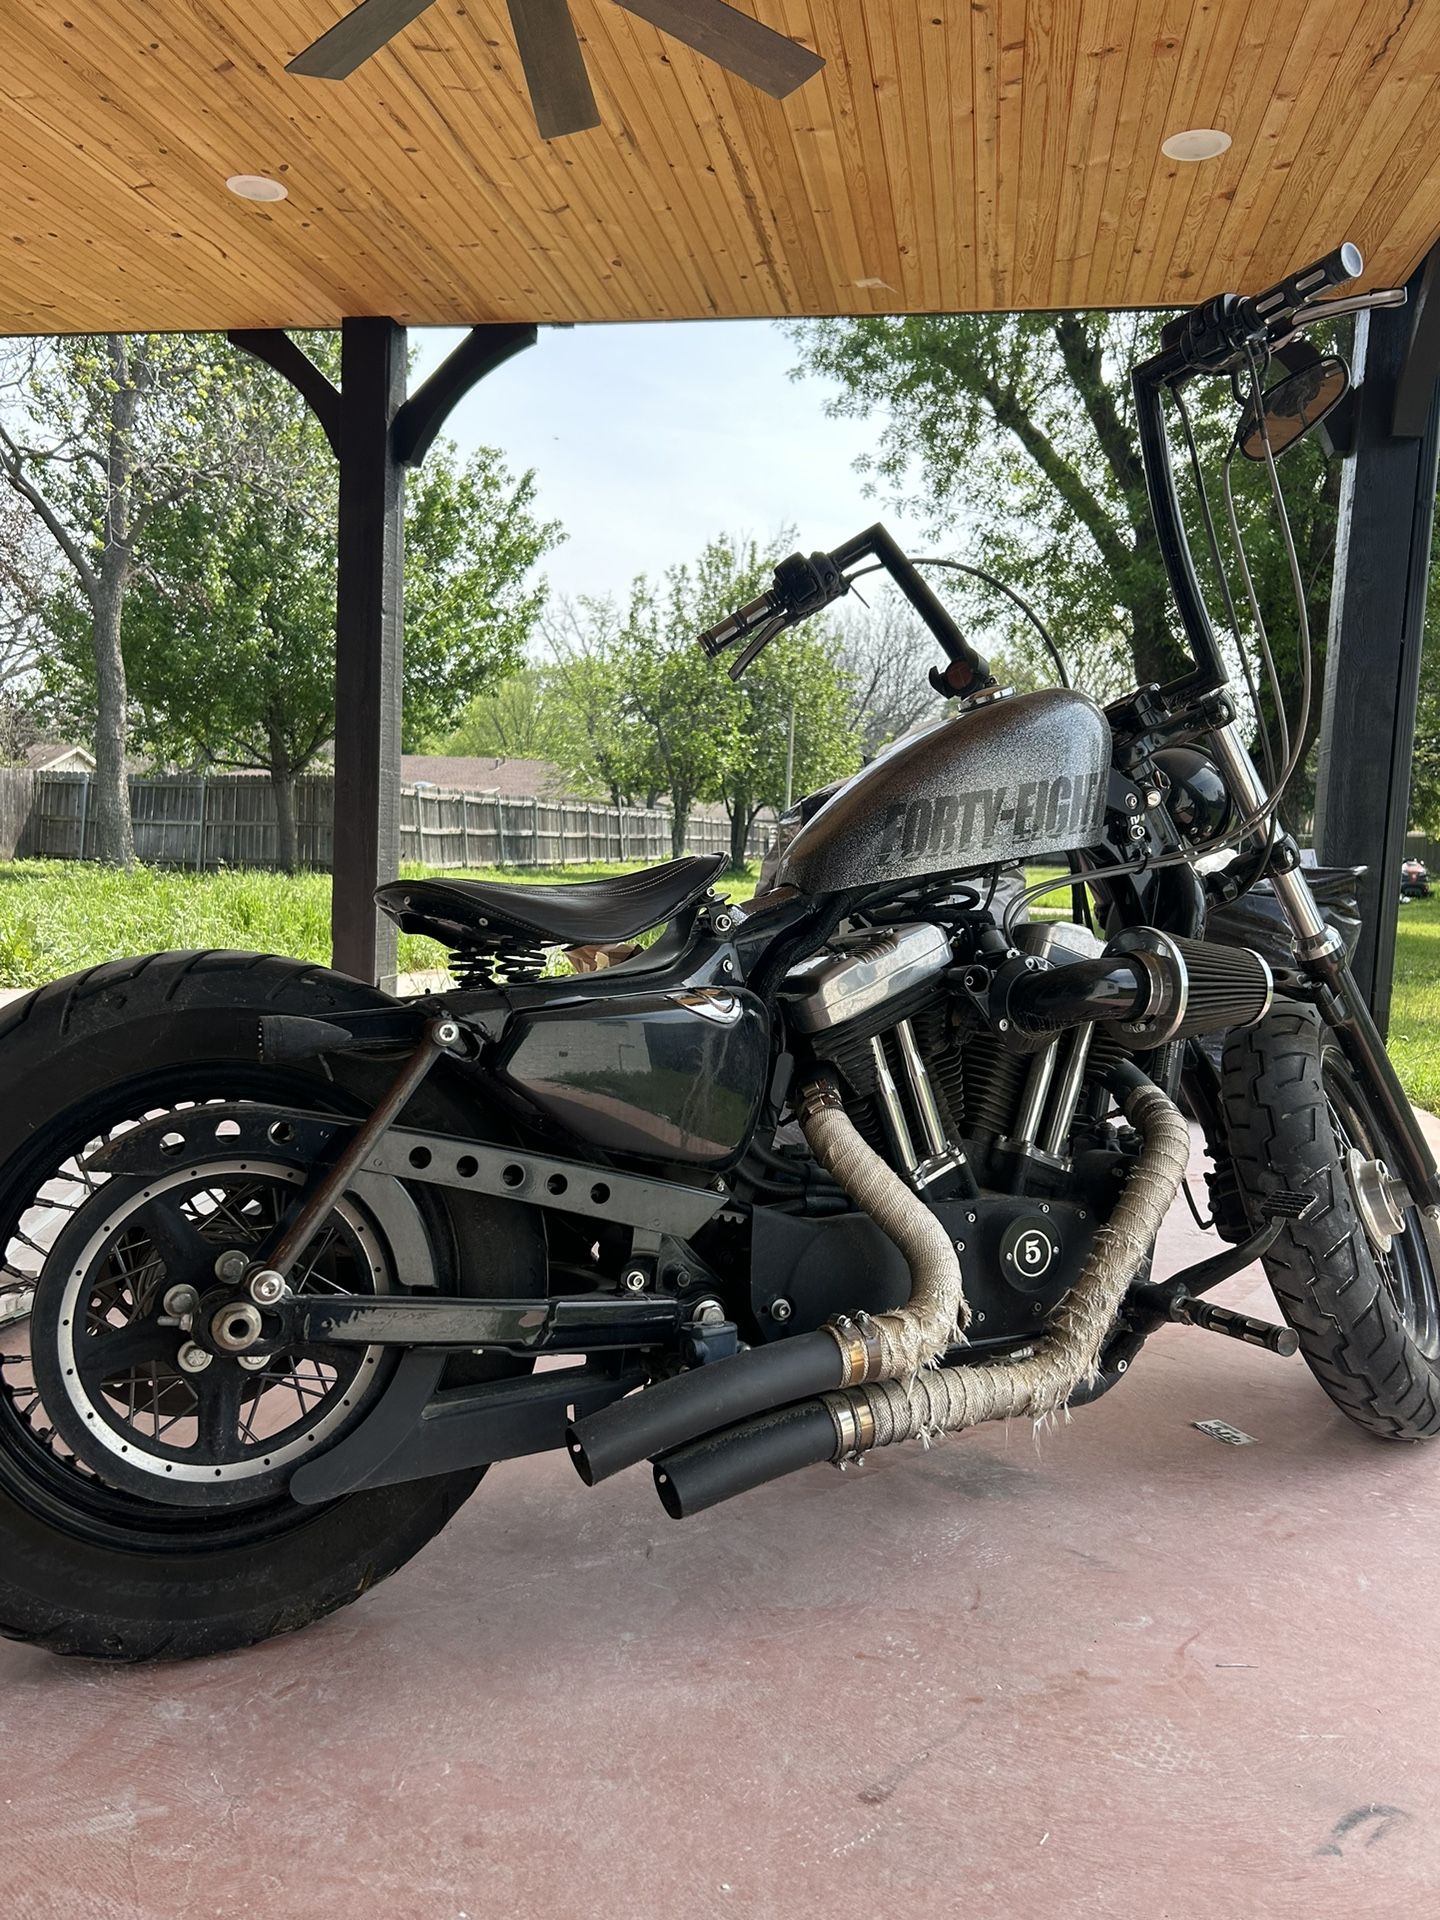 2014 Harley Davidson Sportster 48